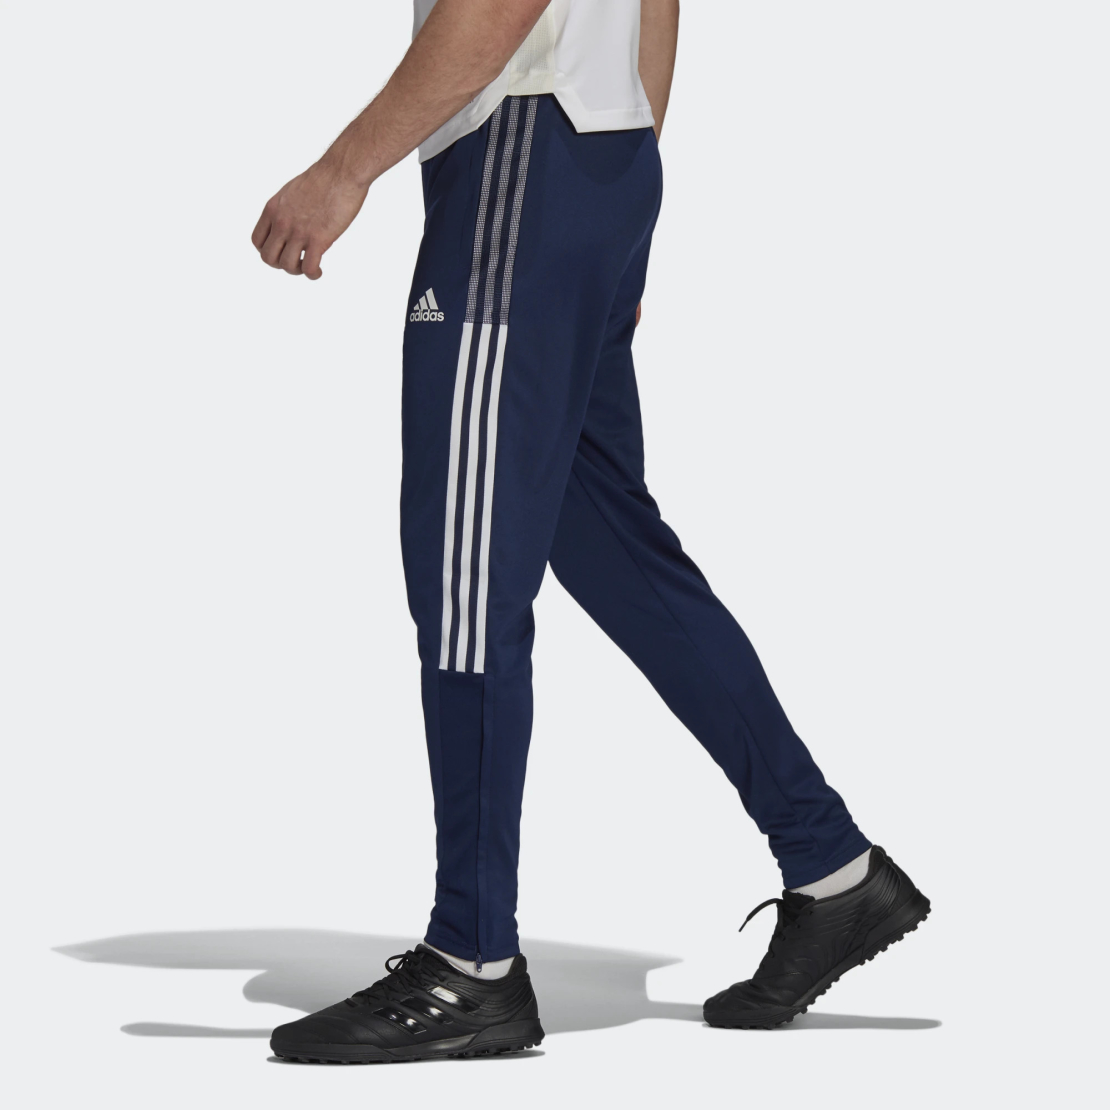 מכנס כדורגל אדידס לגברים | Adidas TIRO 21 Track Pants